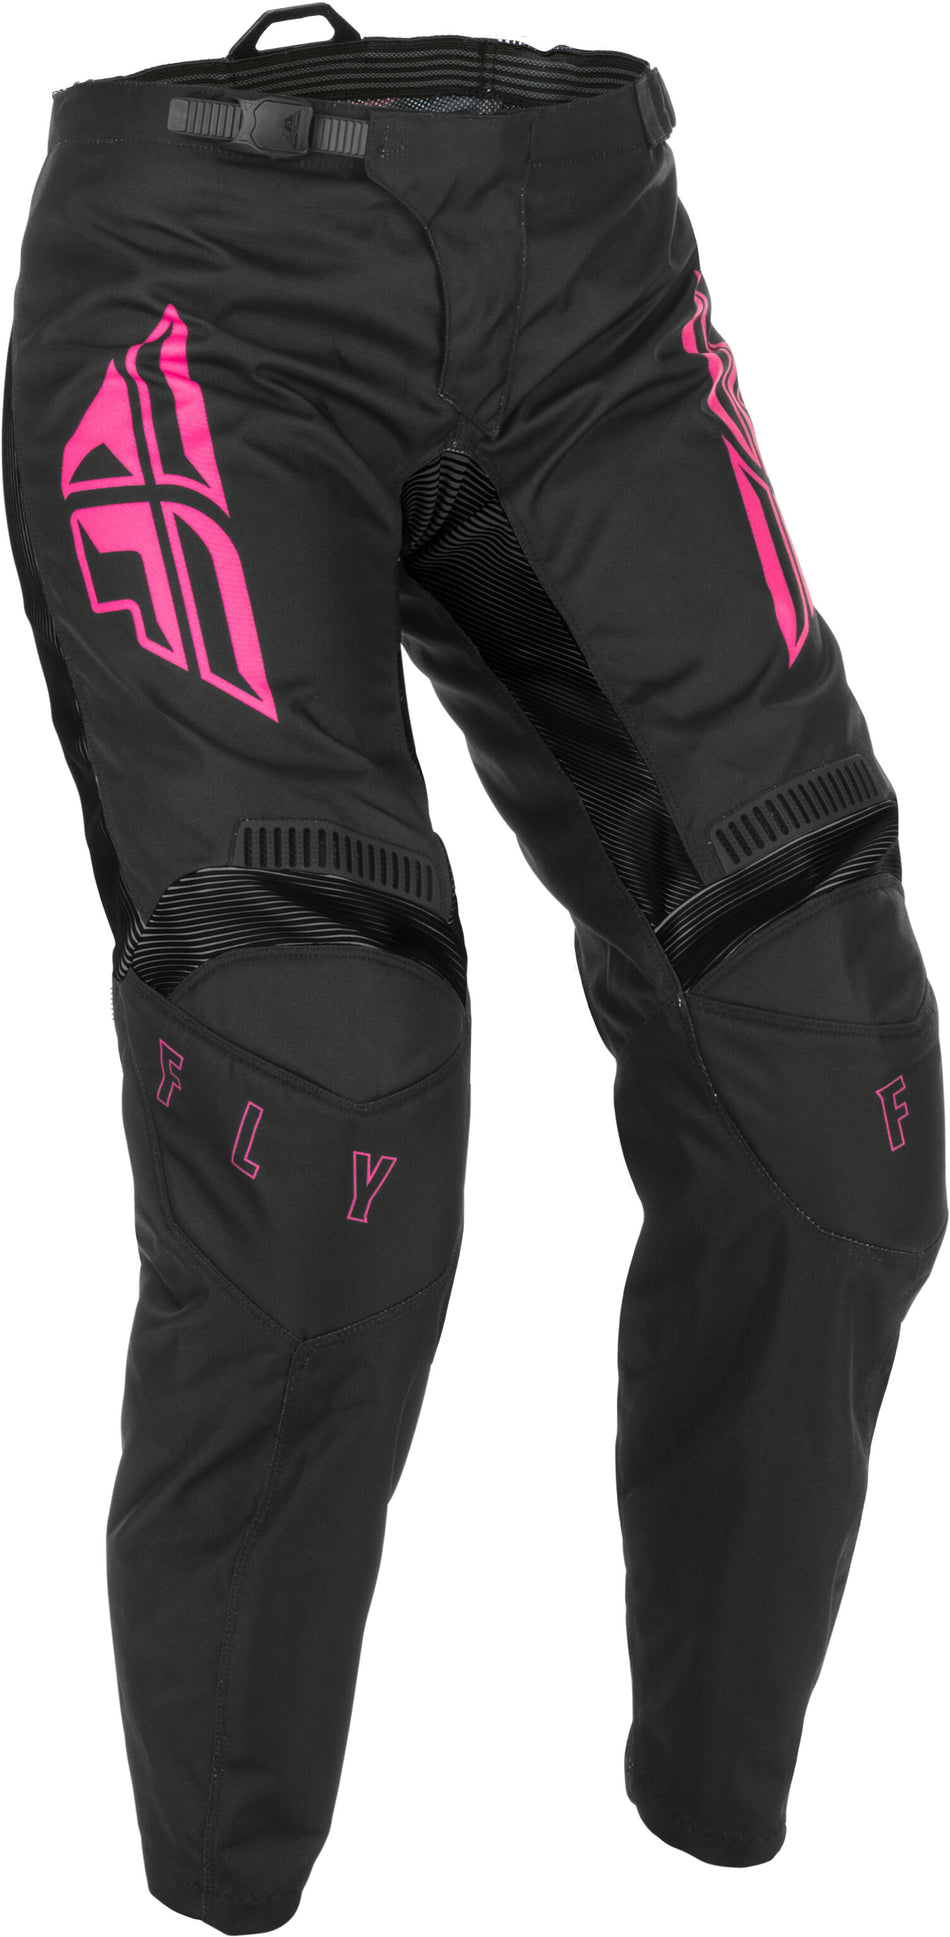 FLY RACING Women's F-16 Pants Black/Pink Sz13/14 374-83010